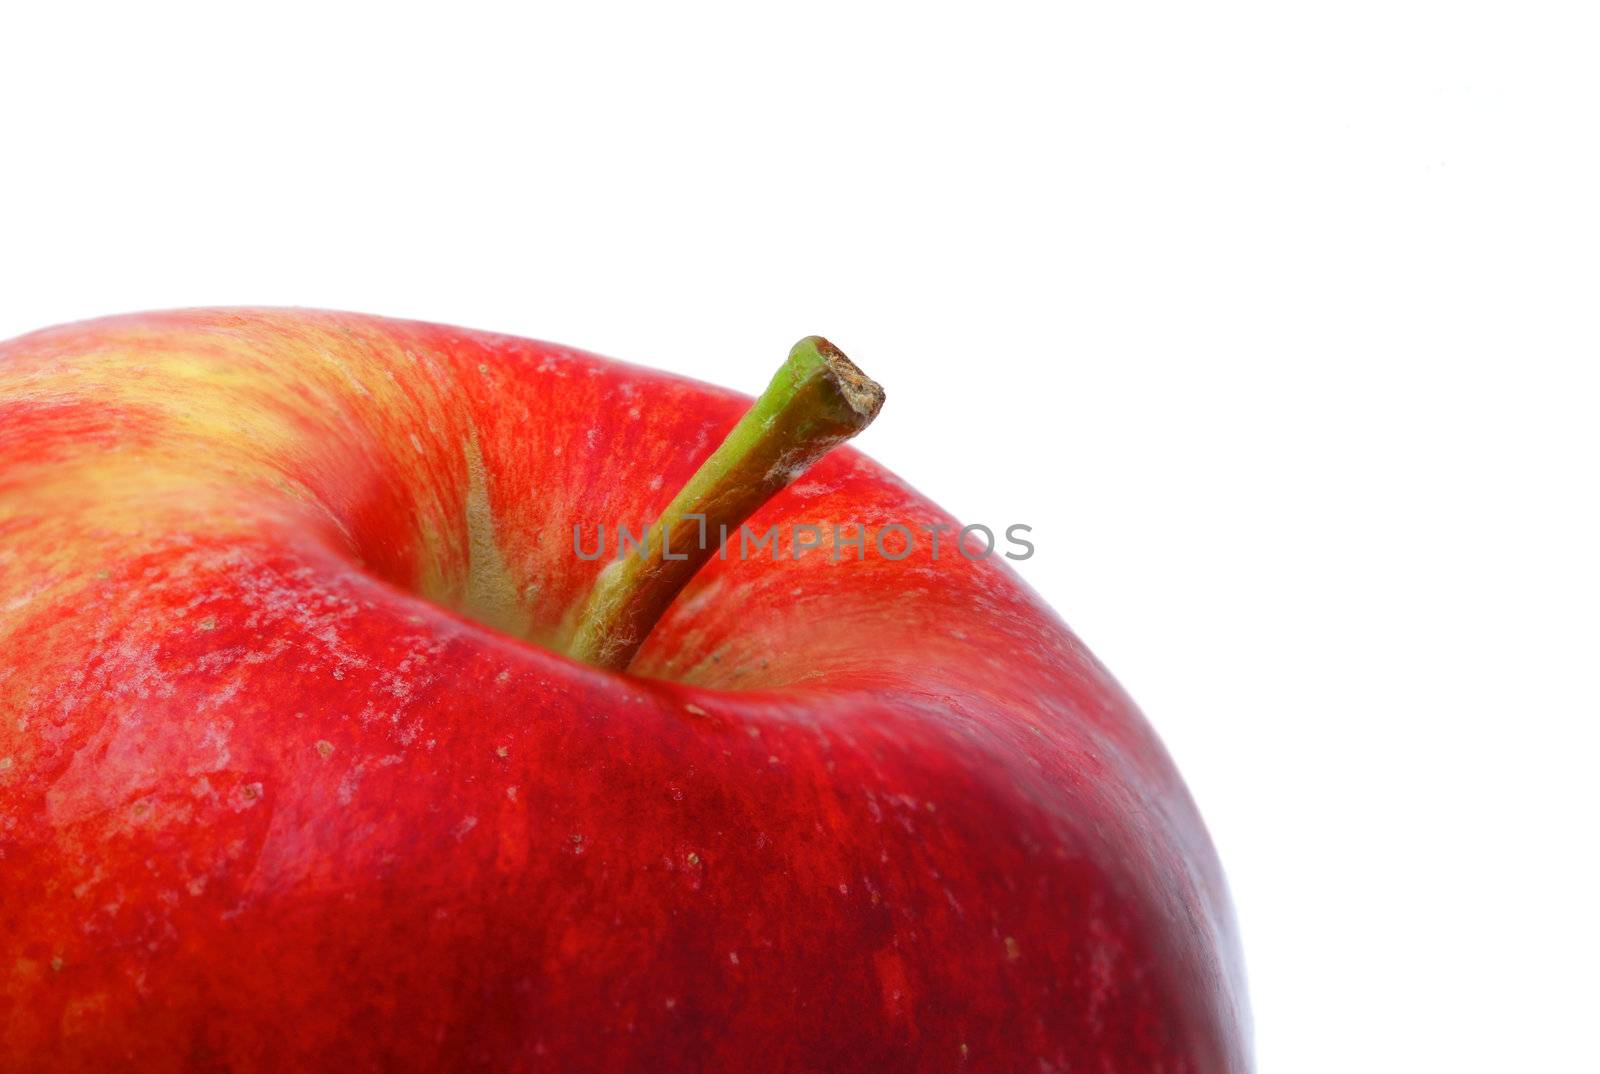 eat apple